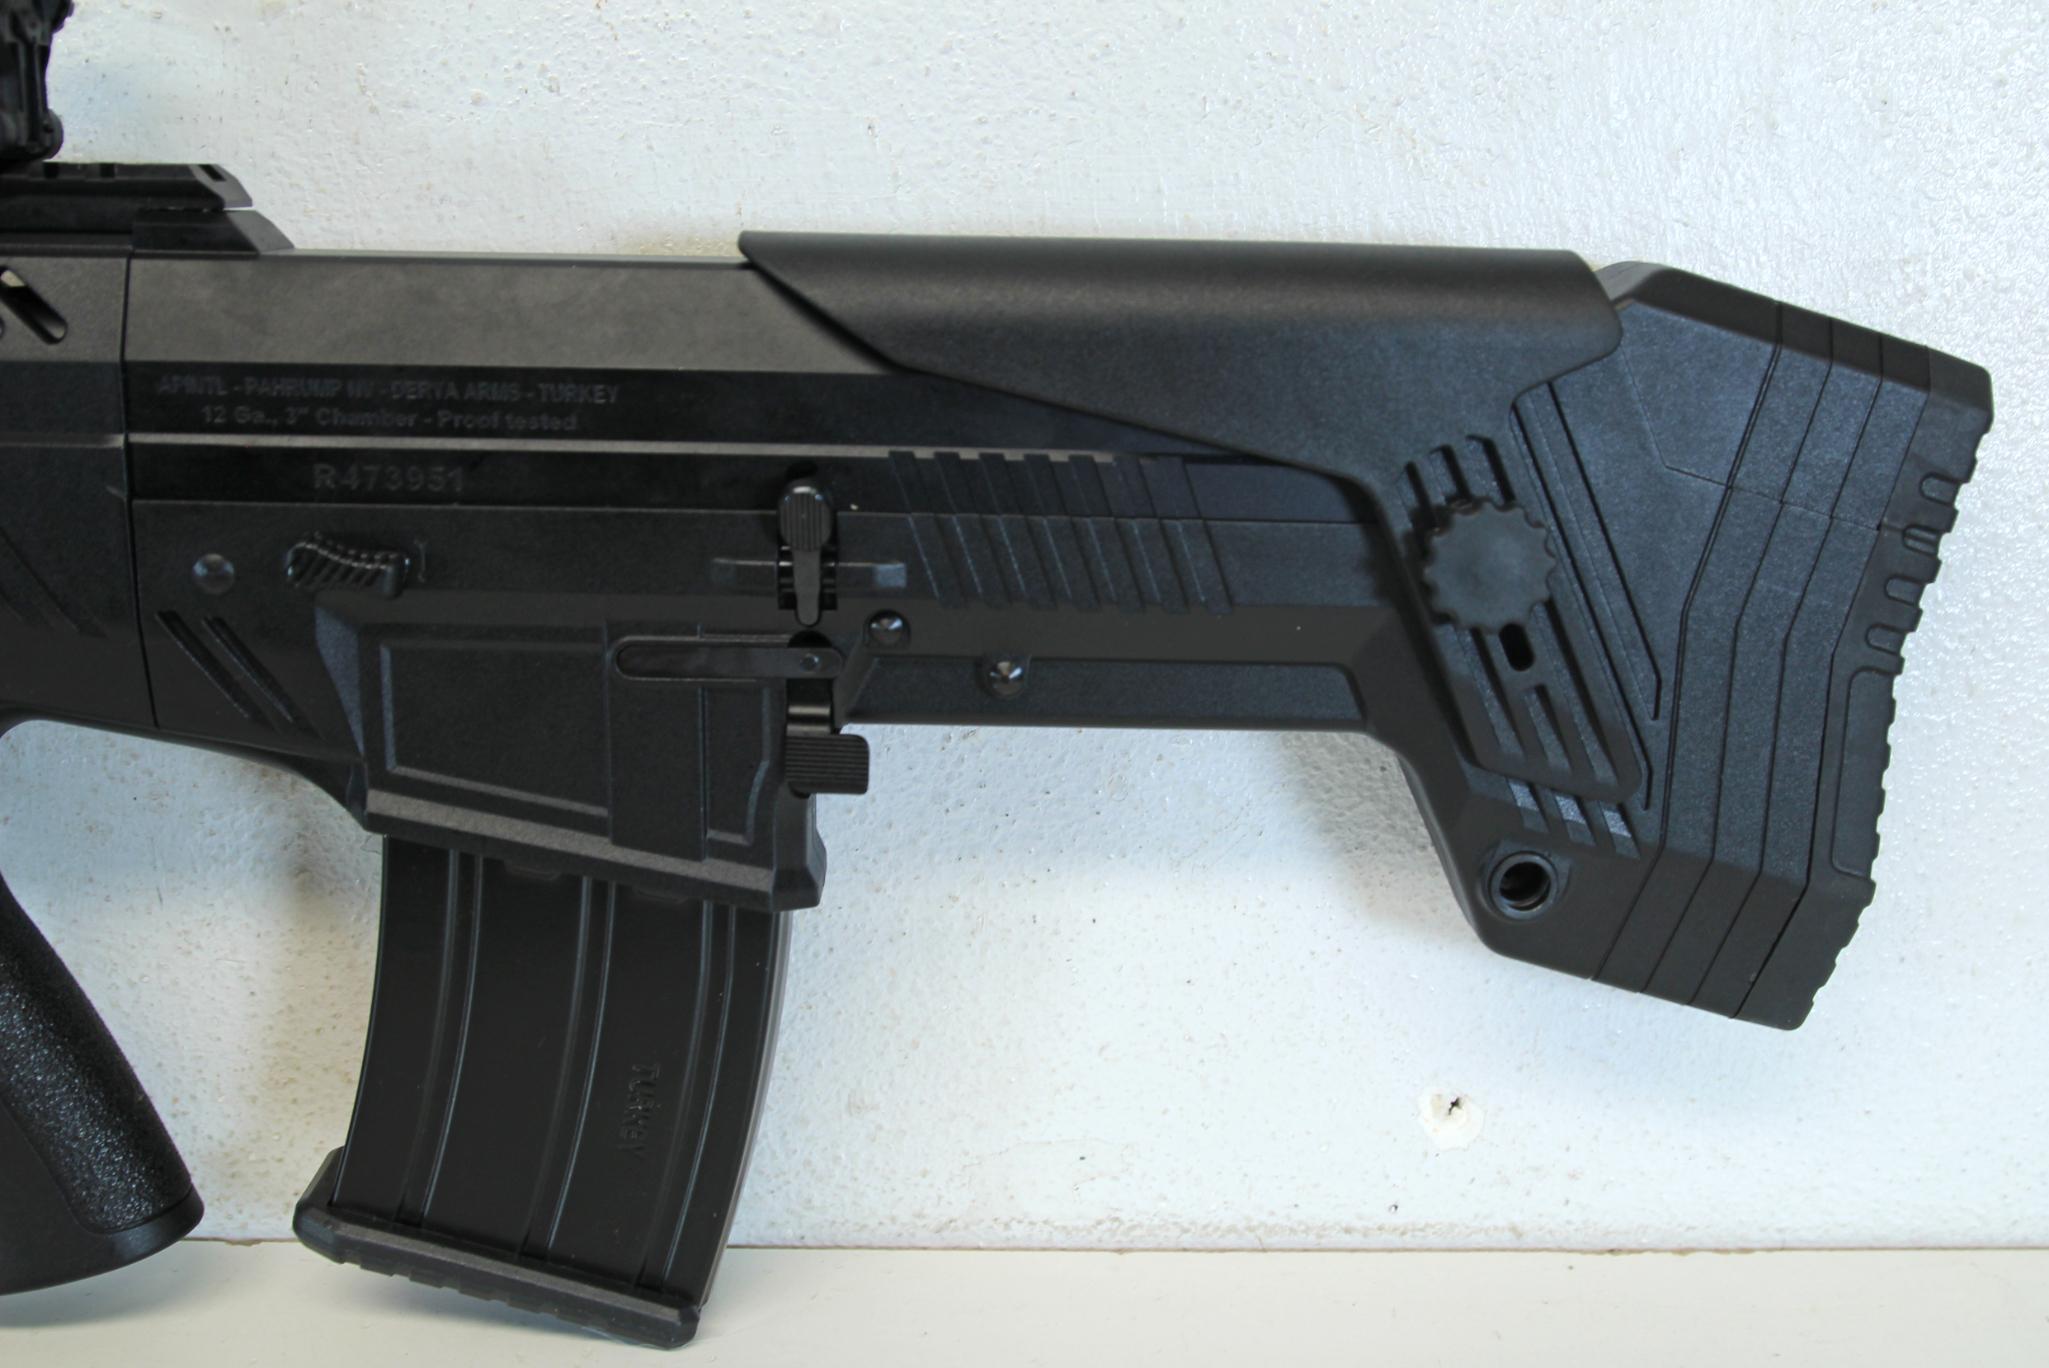 RIA Imports Model VRBP-100-A Mag 12 Ga. Fed Semi-Auto Shotgun, New in Box 3" Chamber... 2 Clips... C